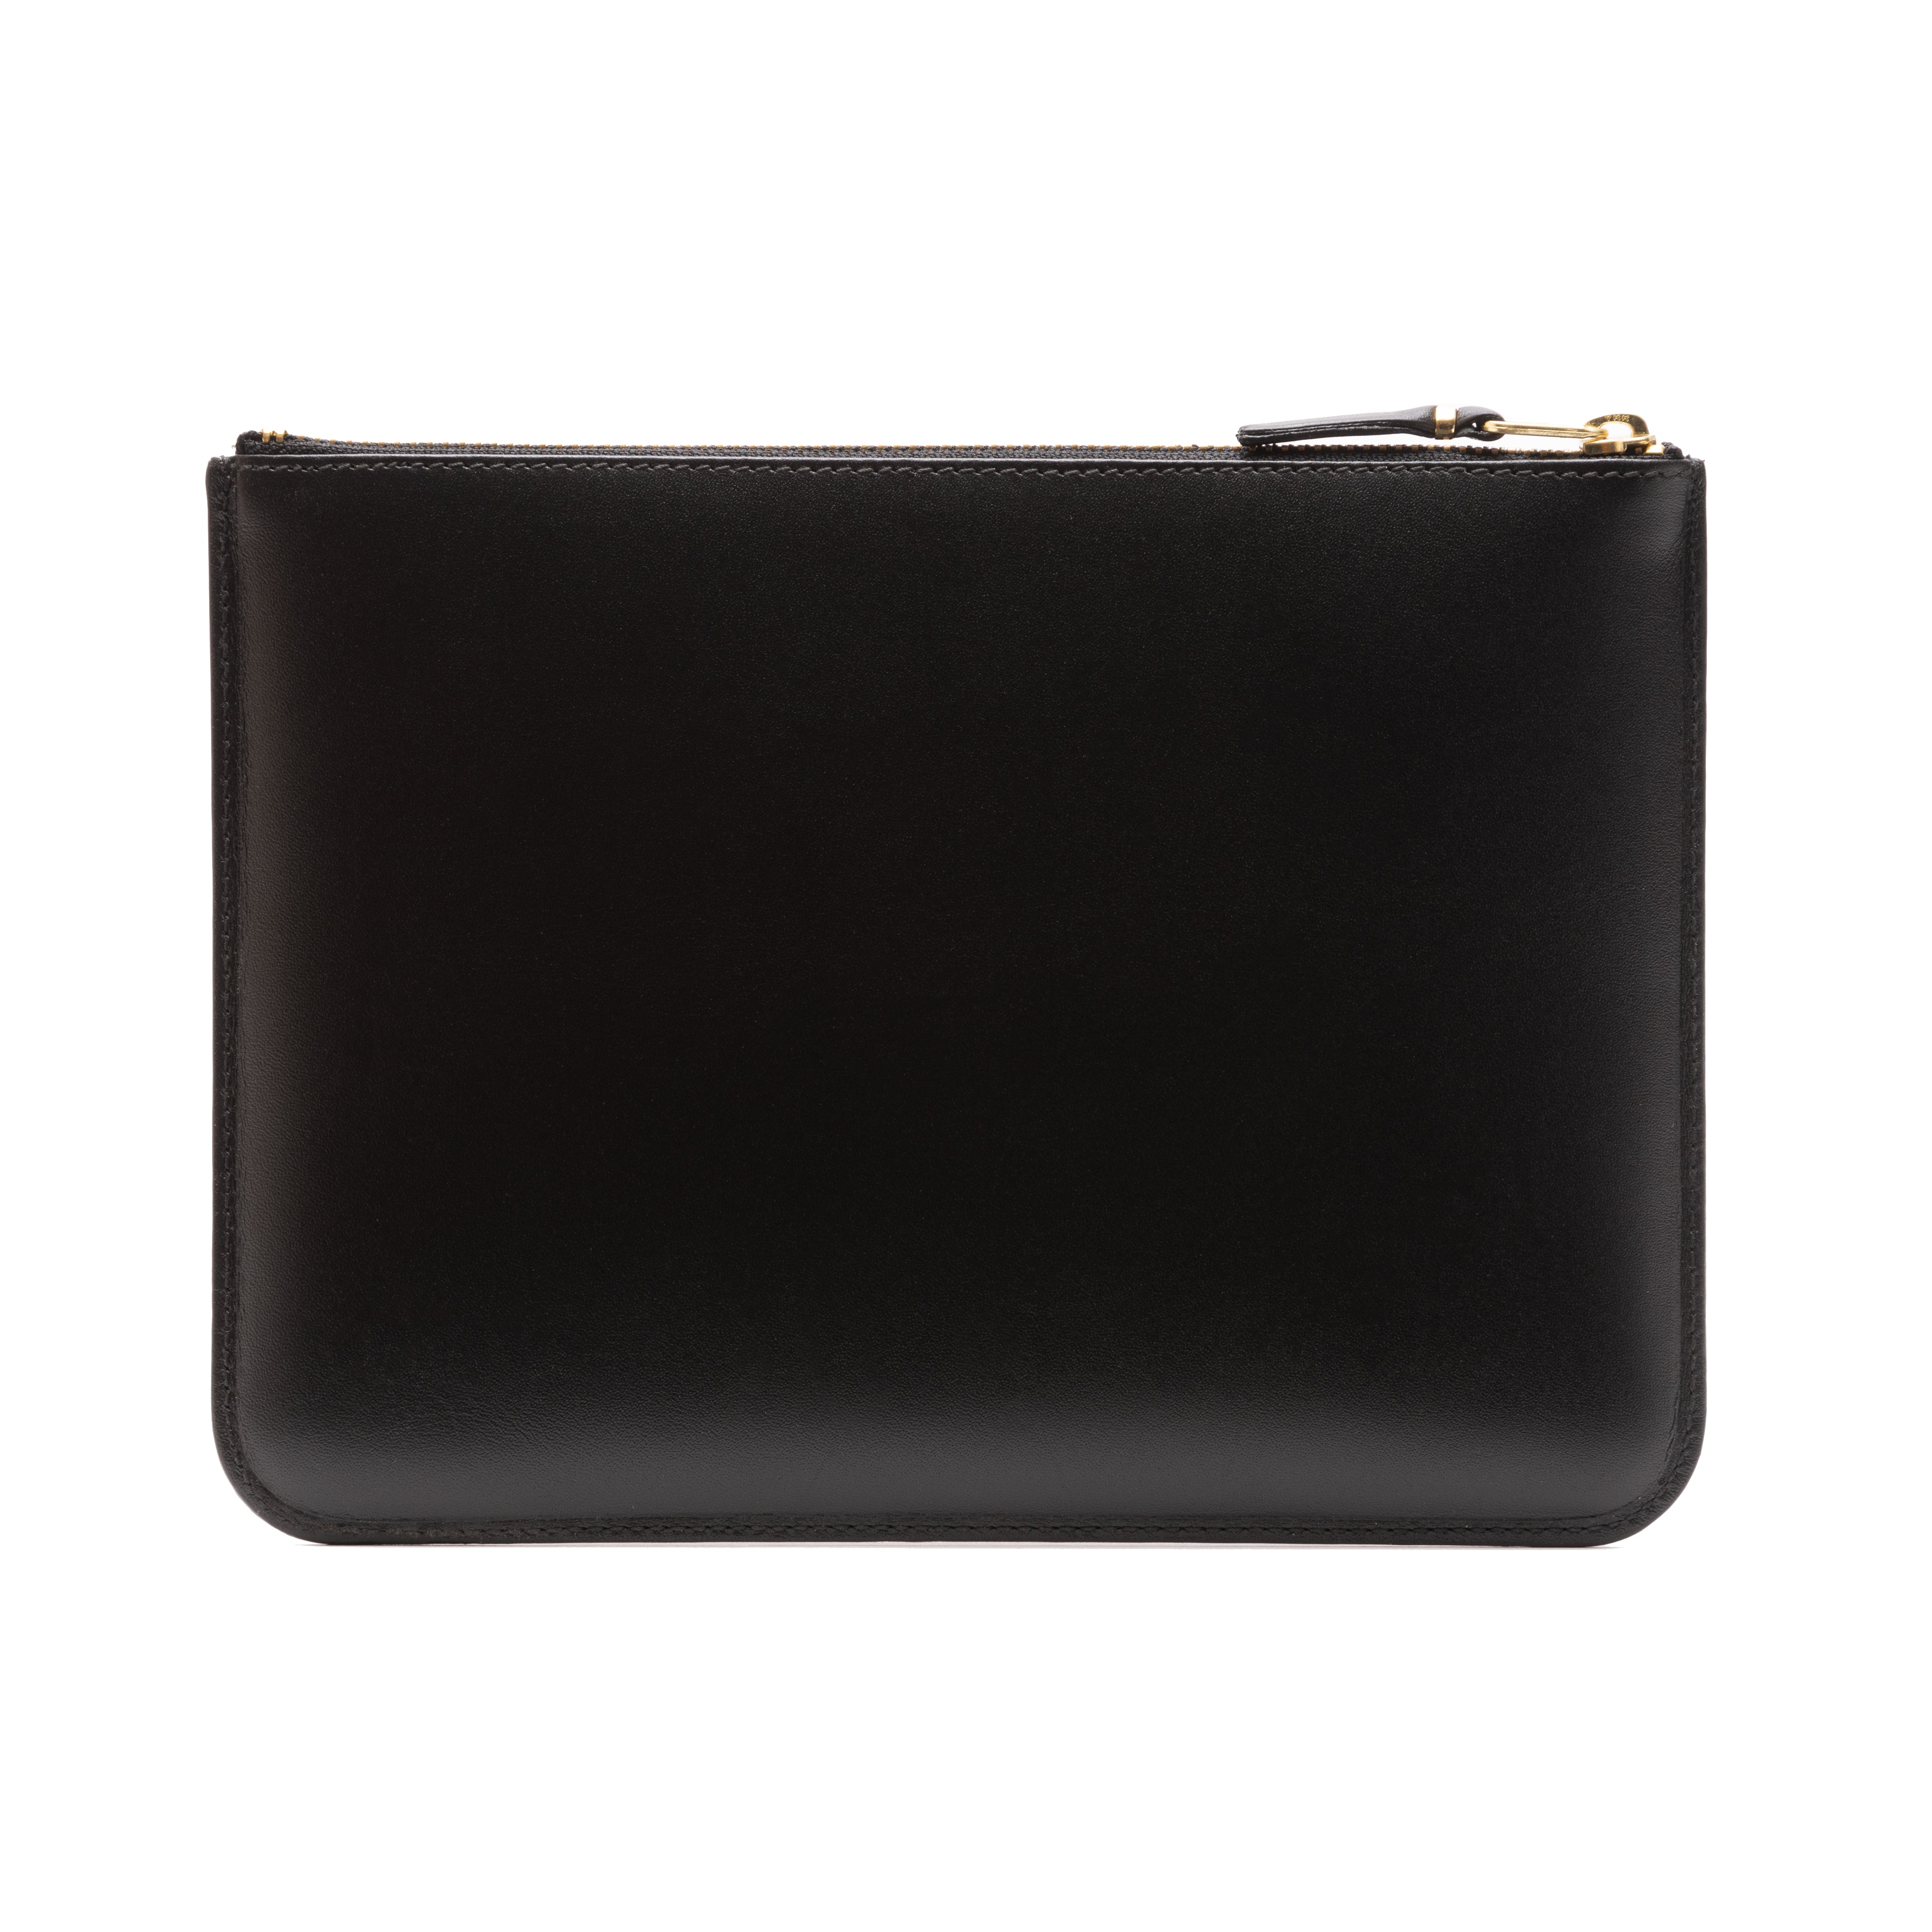 CDG WALLET - Classic Leather Outside Pocket Wallet - (8Z-X051 